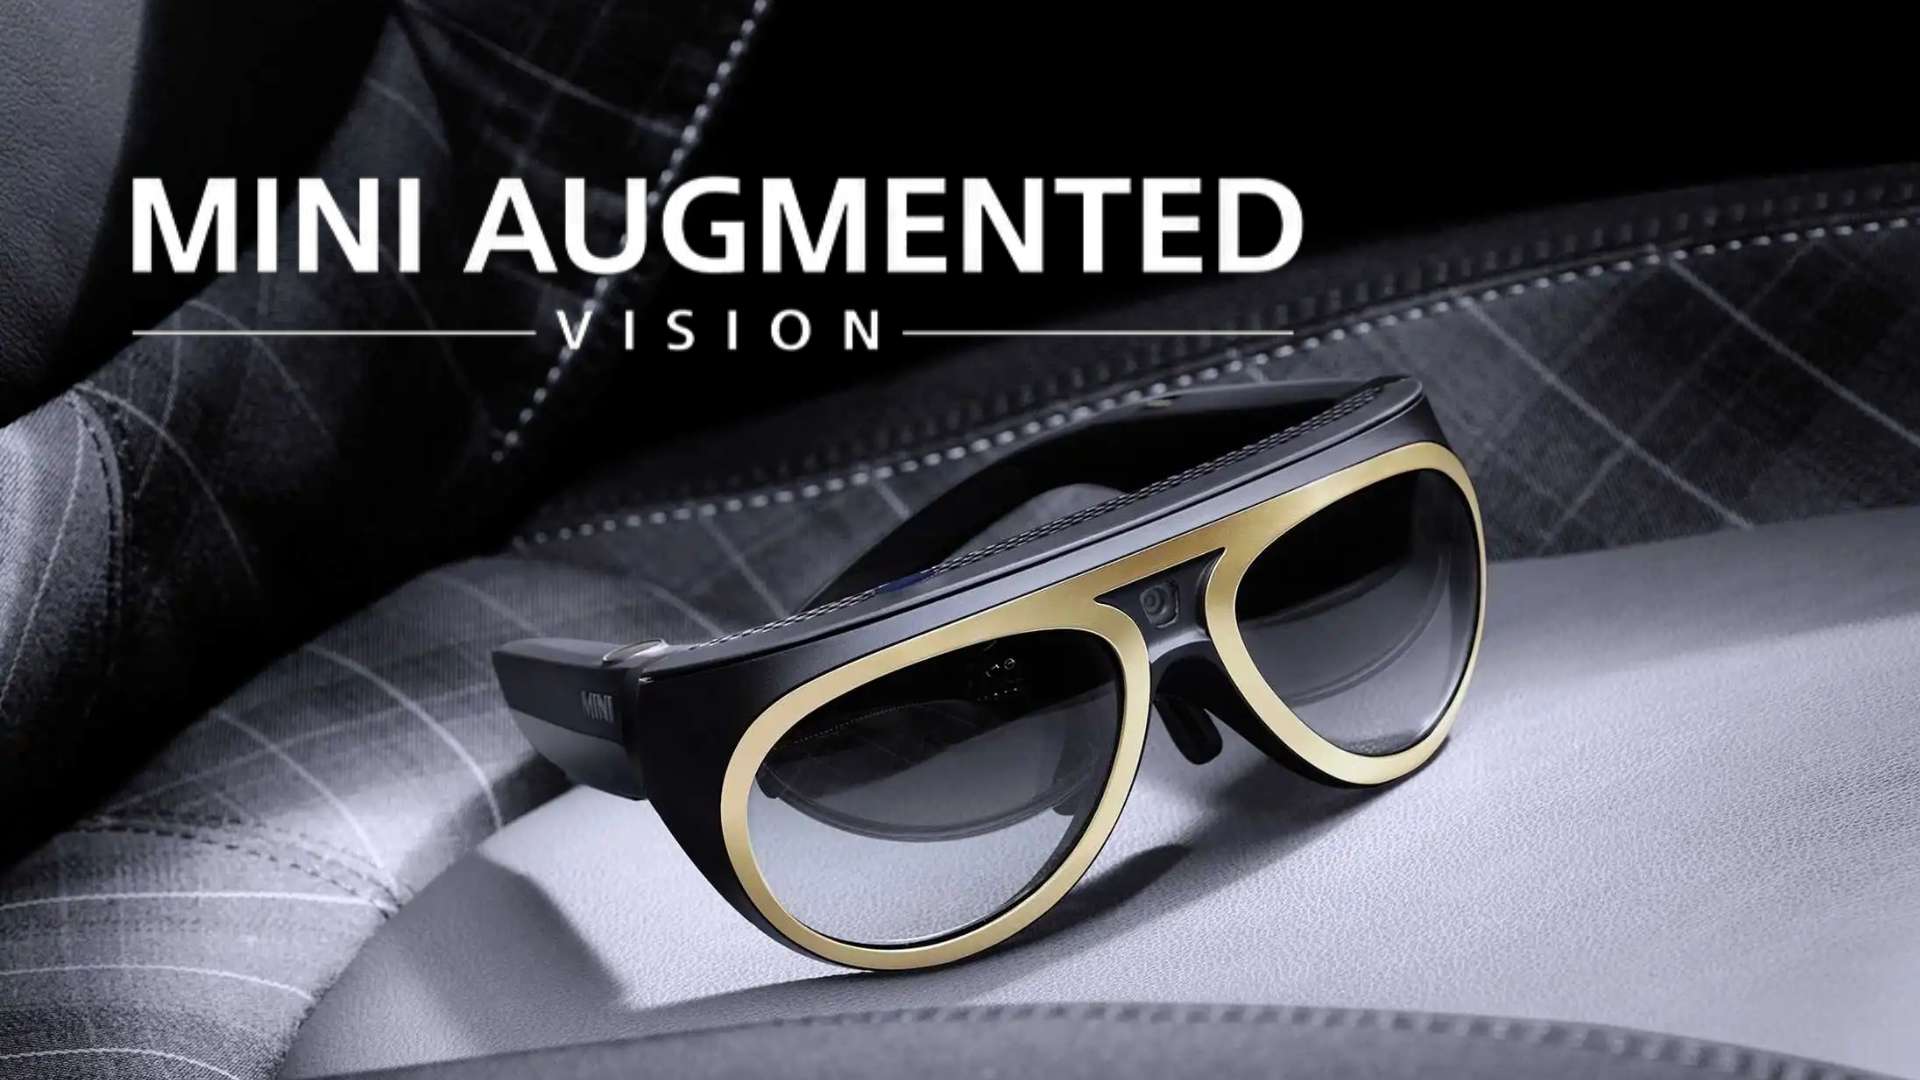 MINI Augmented Reality Vision Glasses